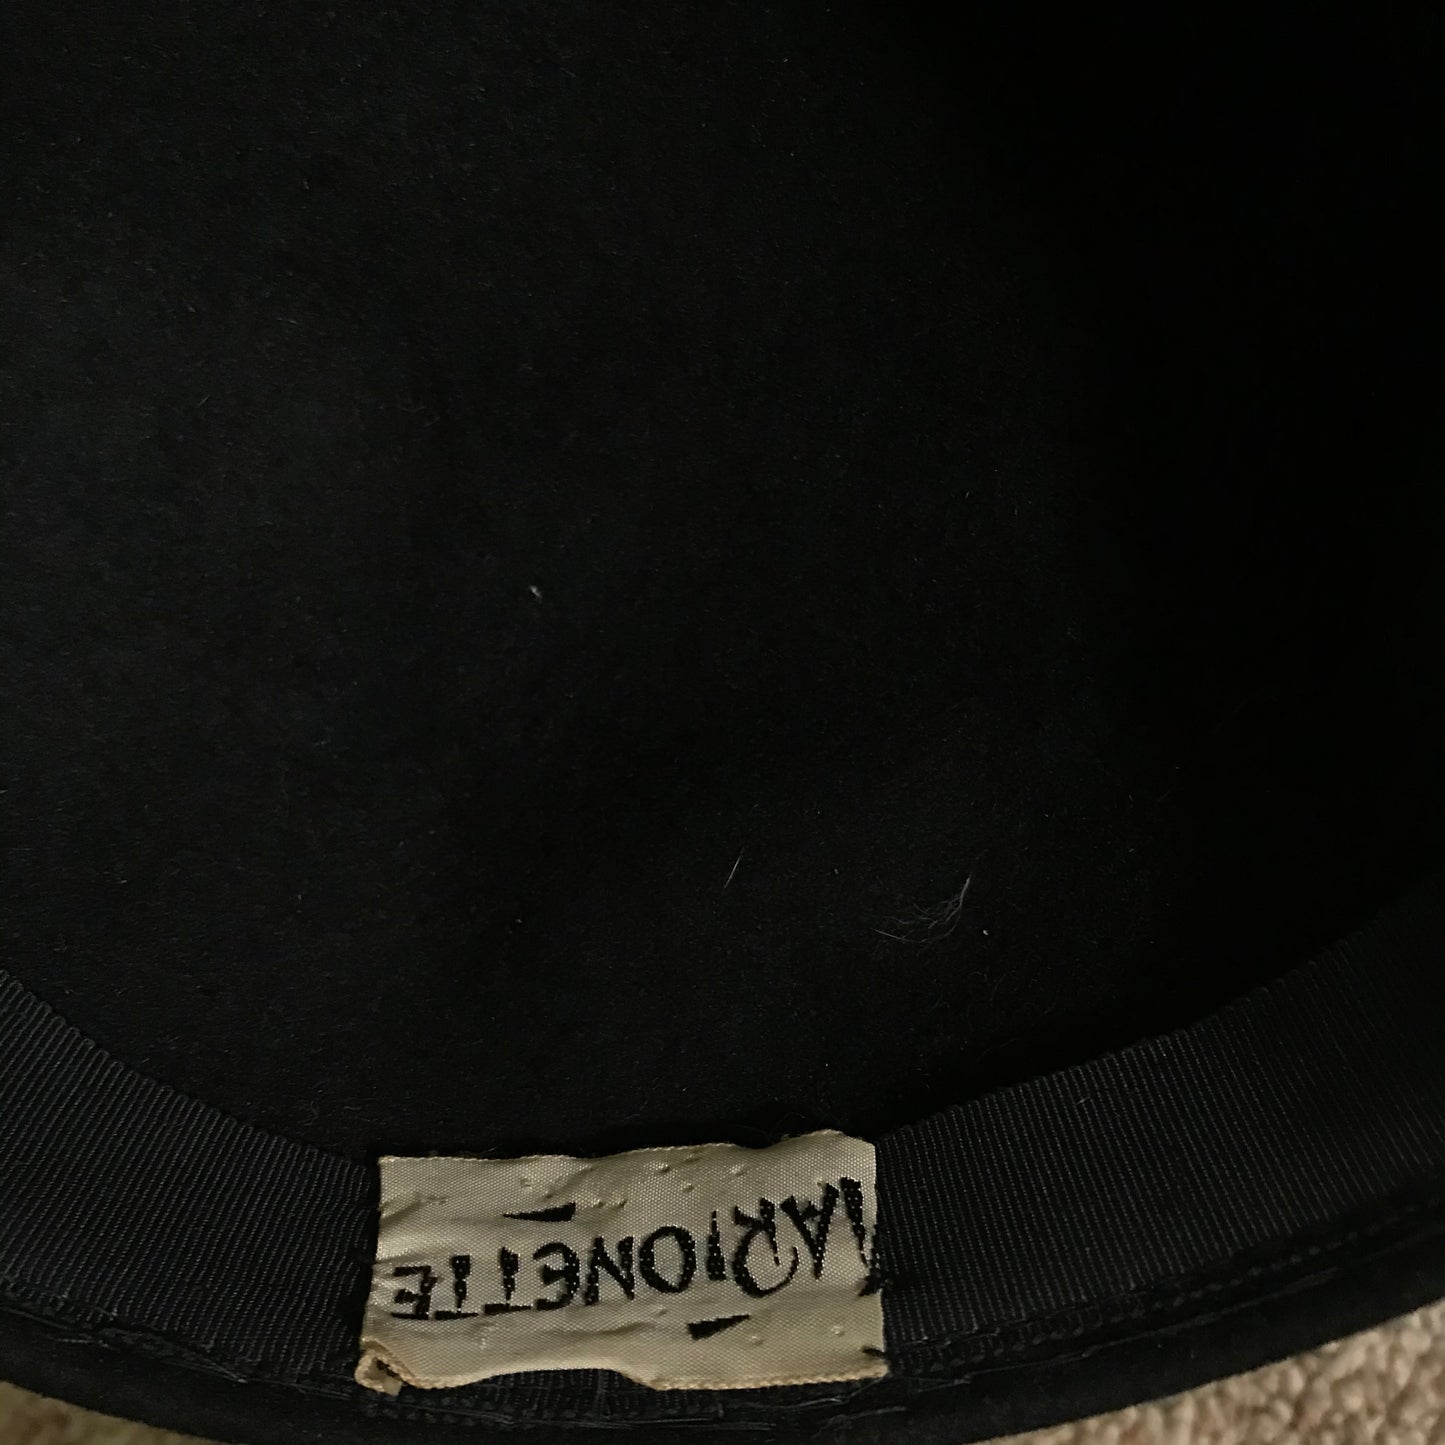 Midnight Black Dramatic Asymmetrical Tilt Hat with Feather Plume circa 1940s